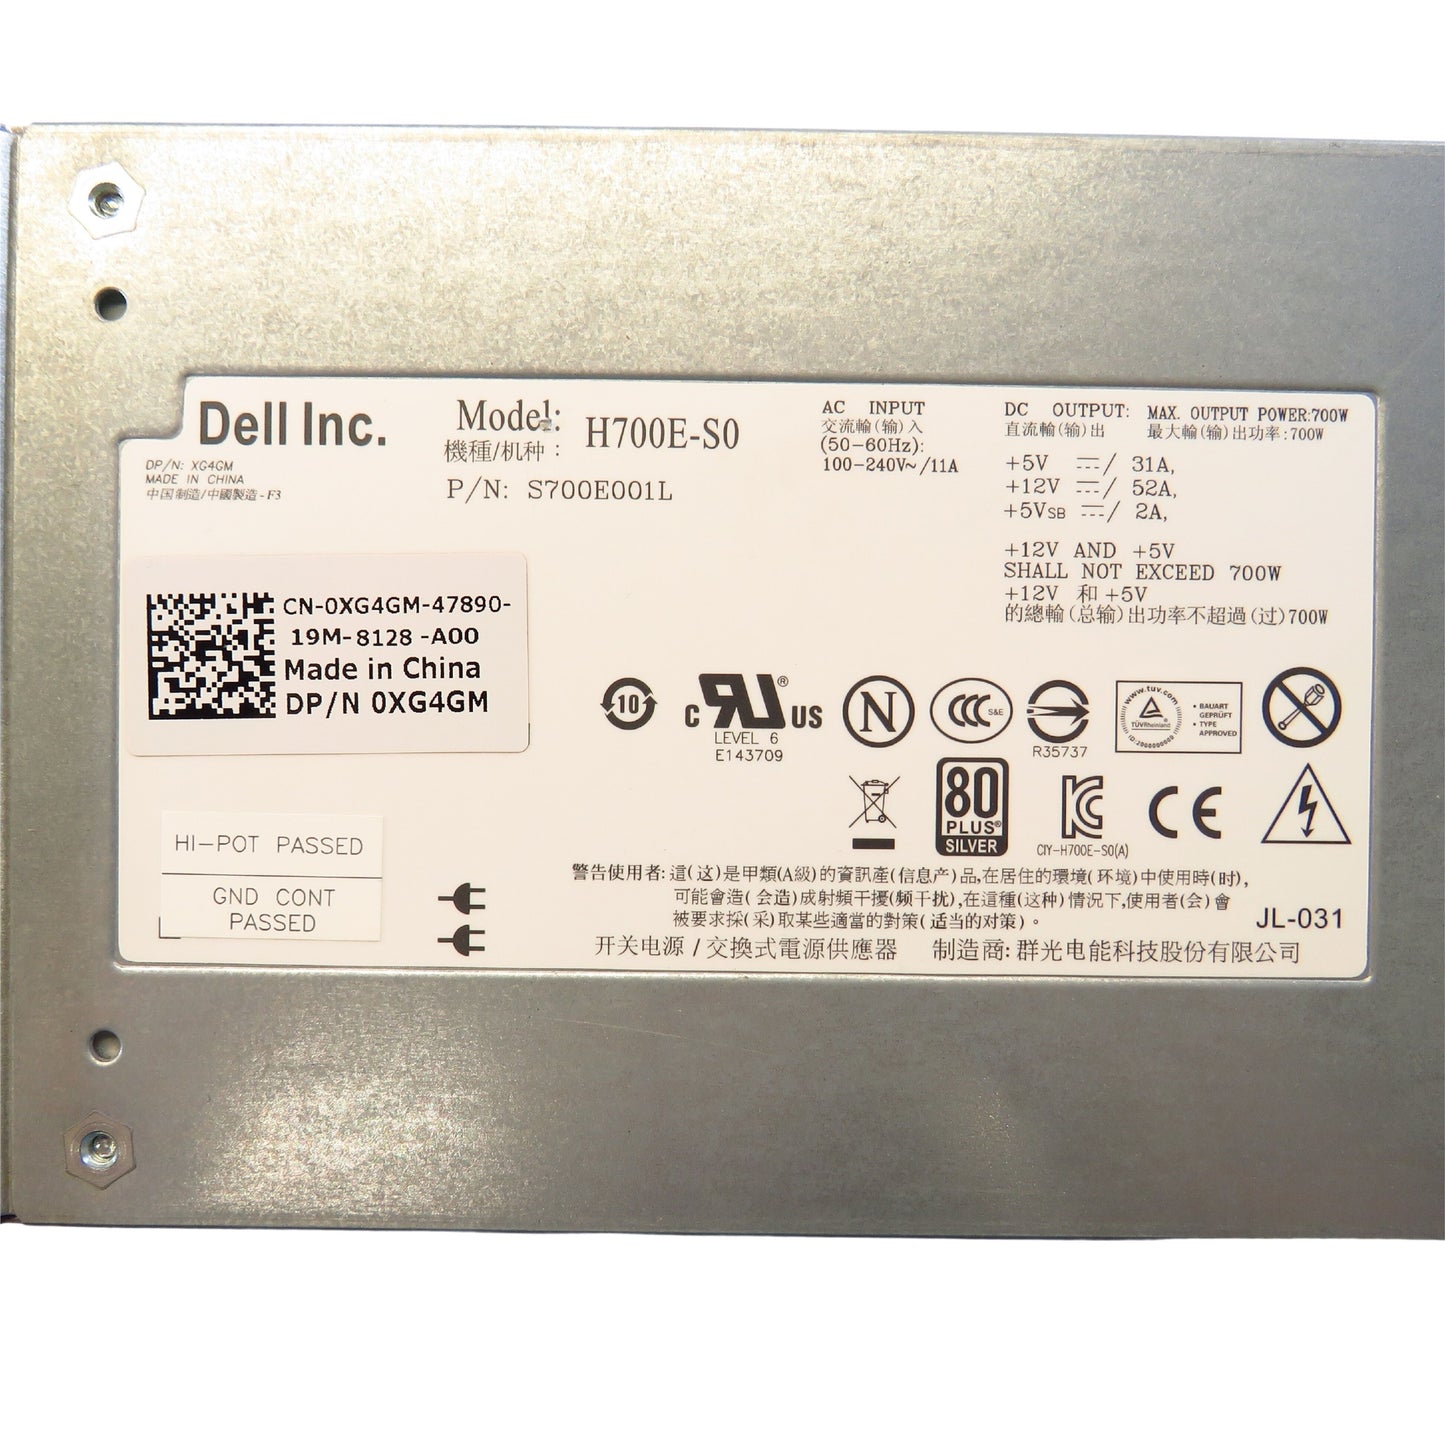 Dell XG4GM 700W Redundant Server Power Supply (Refurbished)